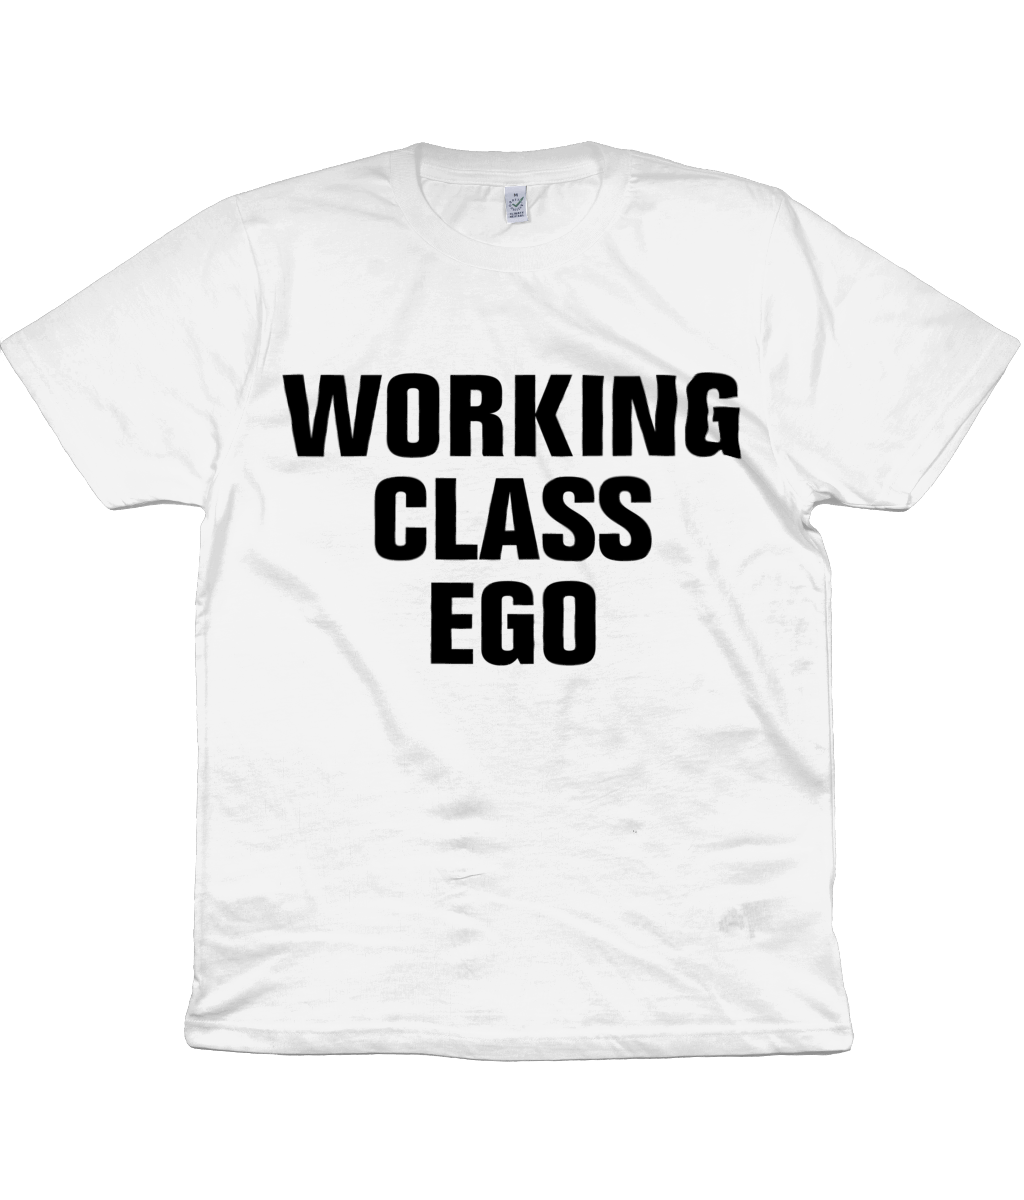 WORKING CLASS EGO